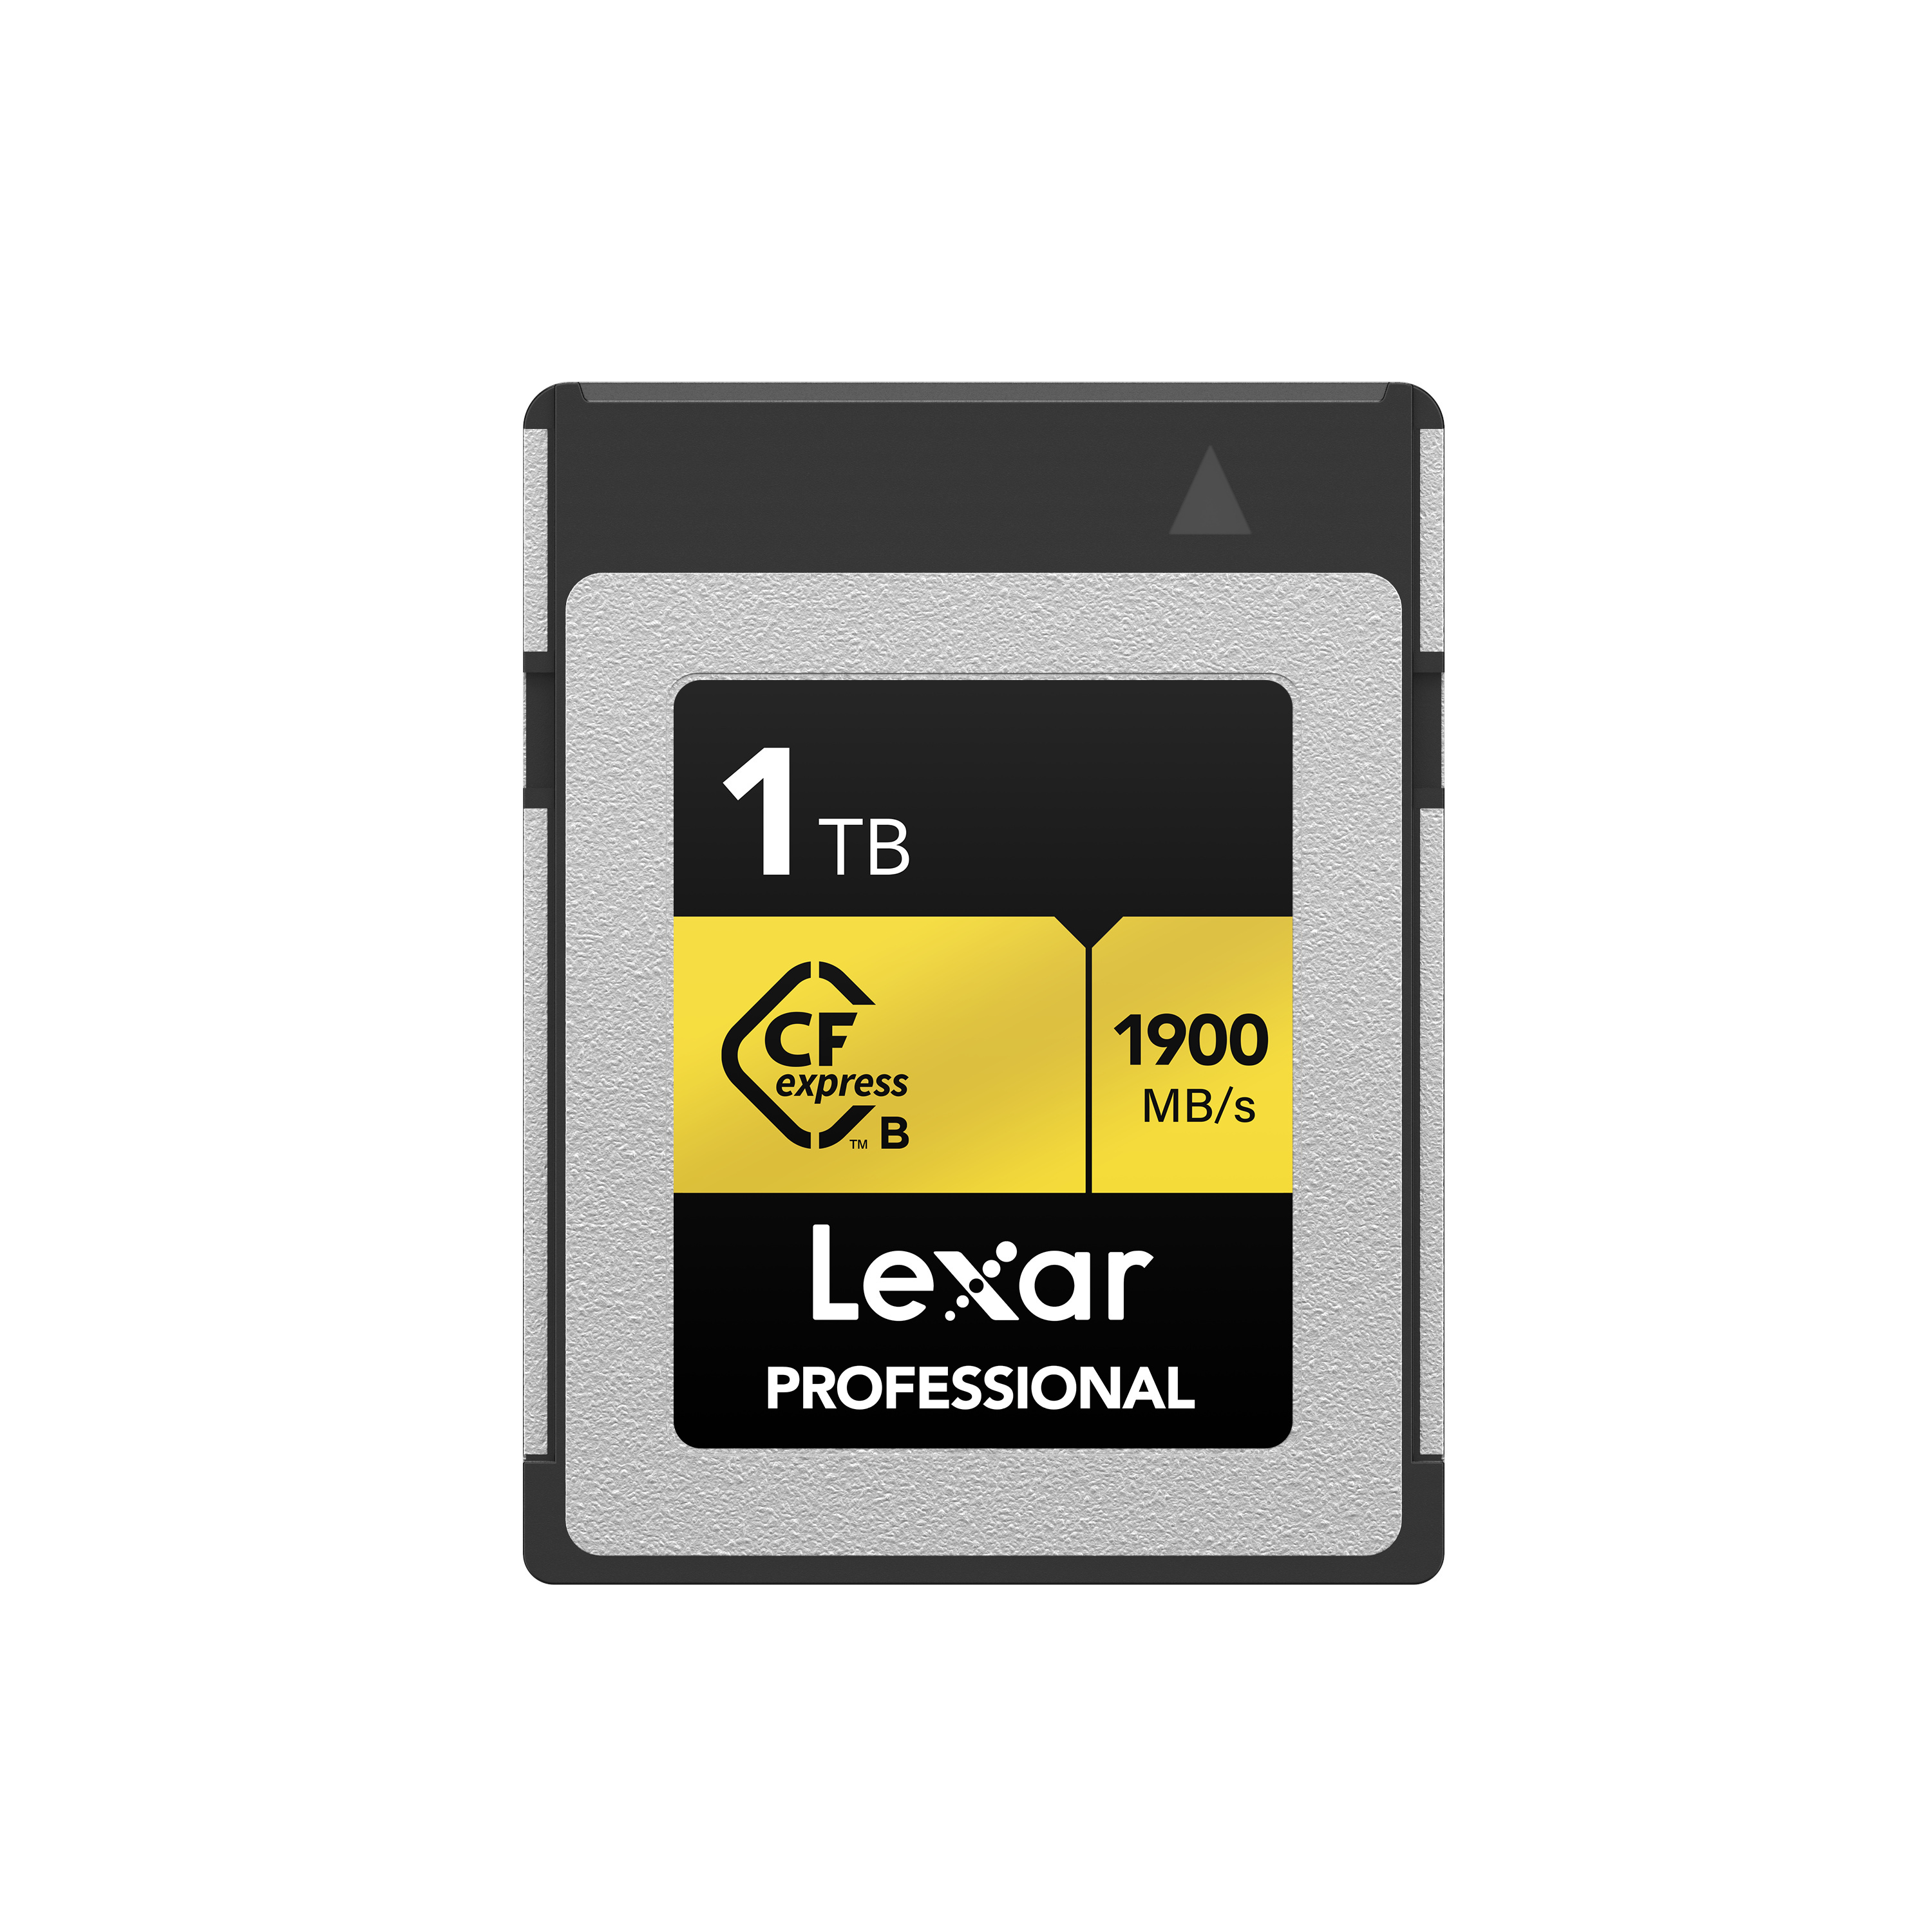 Lexar Professional 1TB CFexpressTM Type B Card GOLD PRO GOLD Series